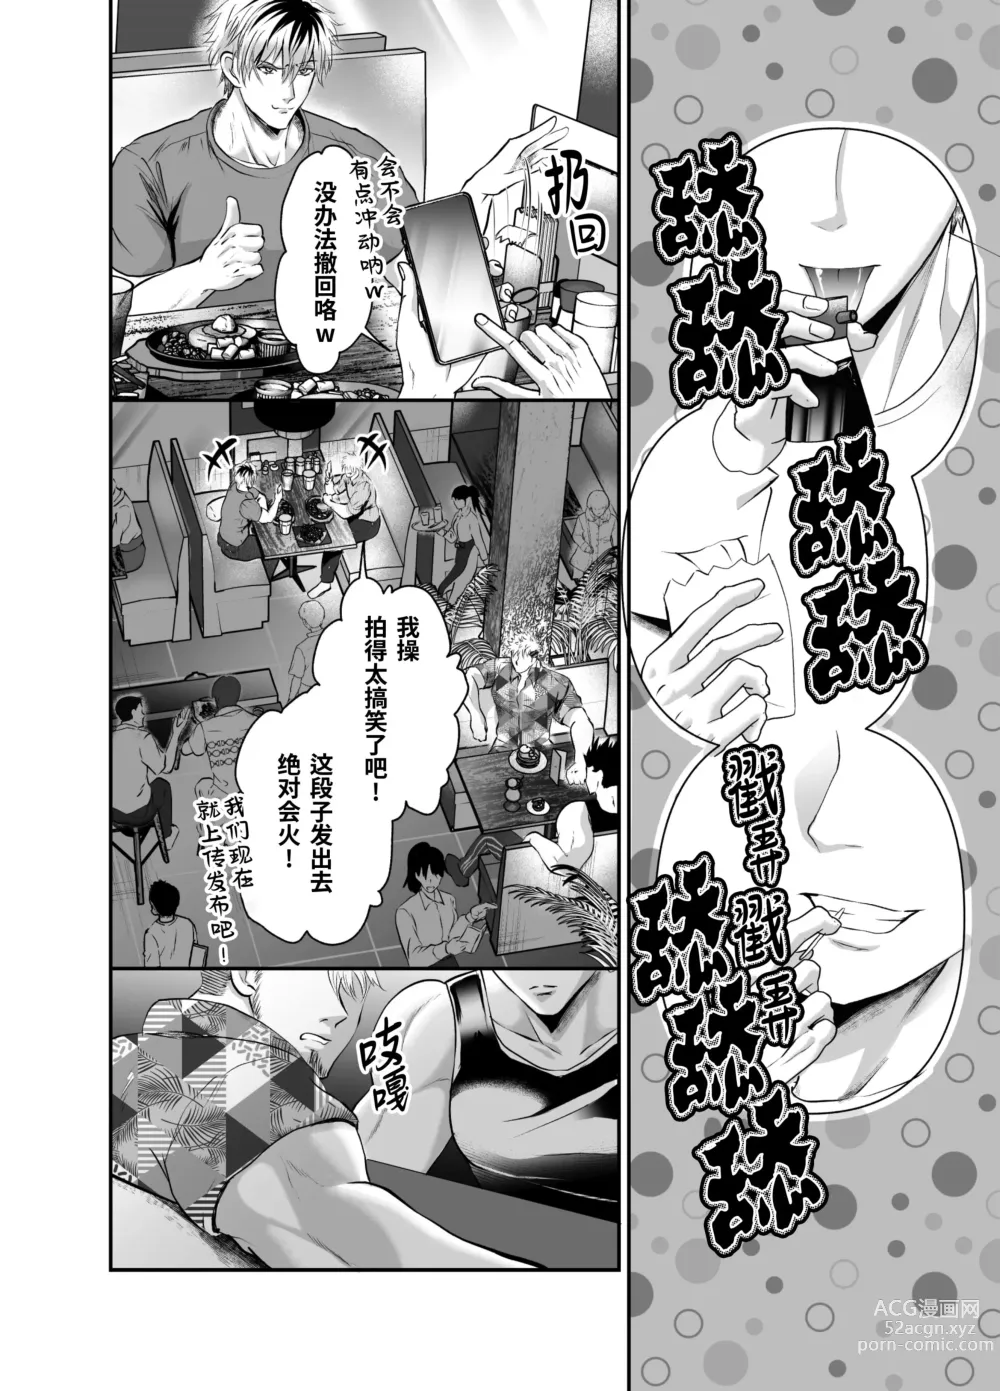 Page 5 of doujinshi 餐厅乱舔事件的加害者沦陷雌堕导致人生终结 (decensored)